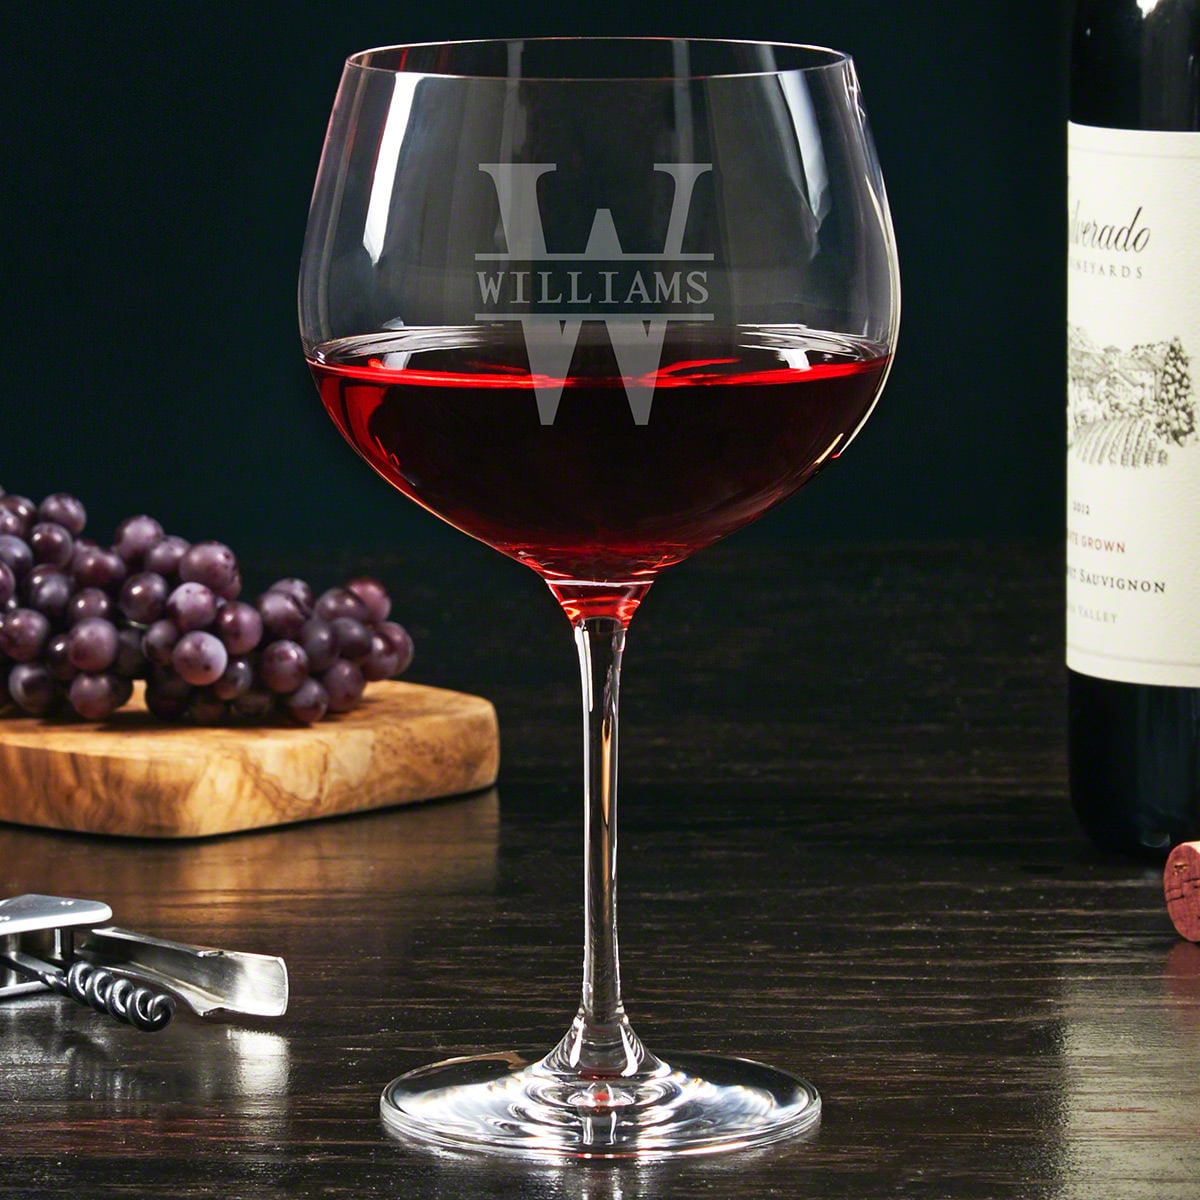 TAGROCK Balloon Red White Wine Glass, 650Ml - Set of 2